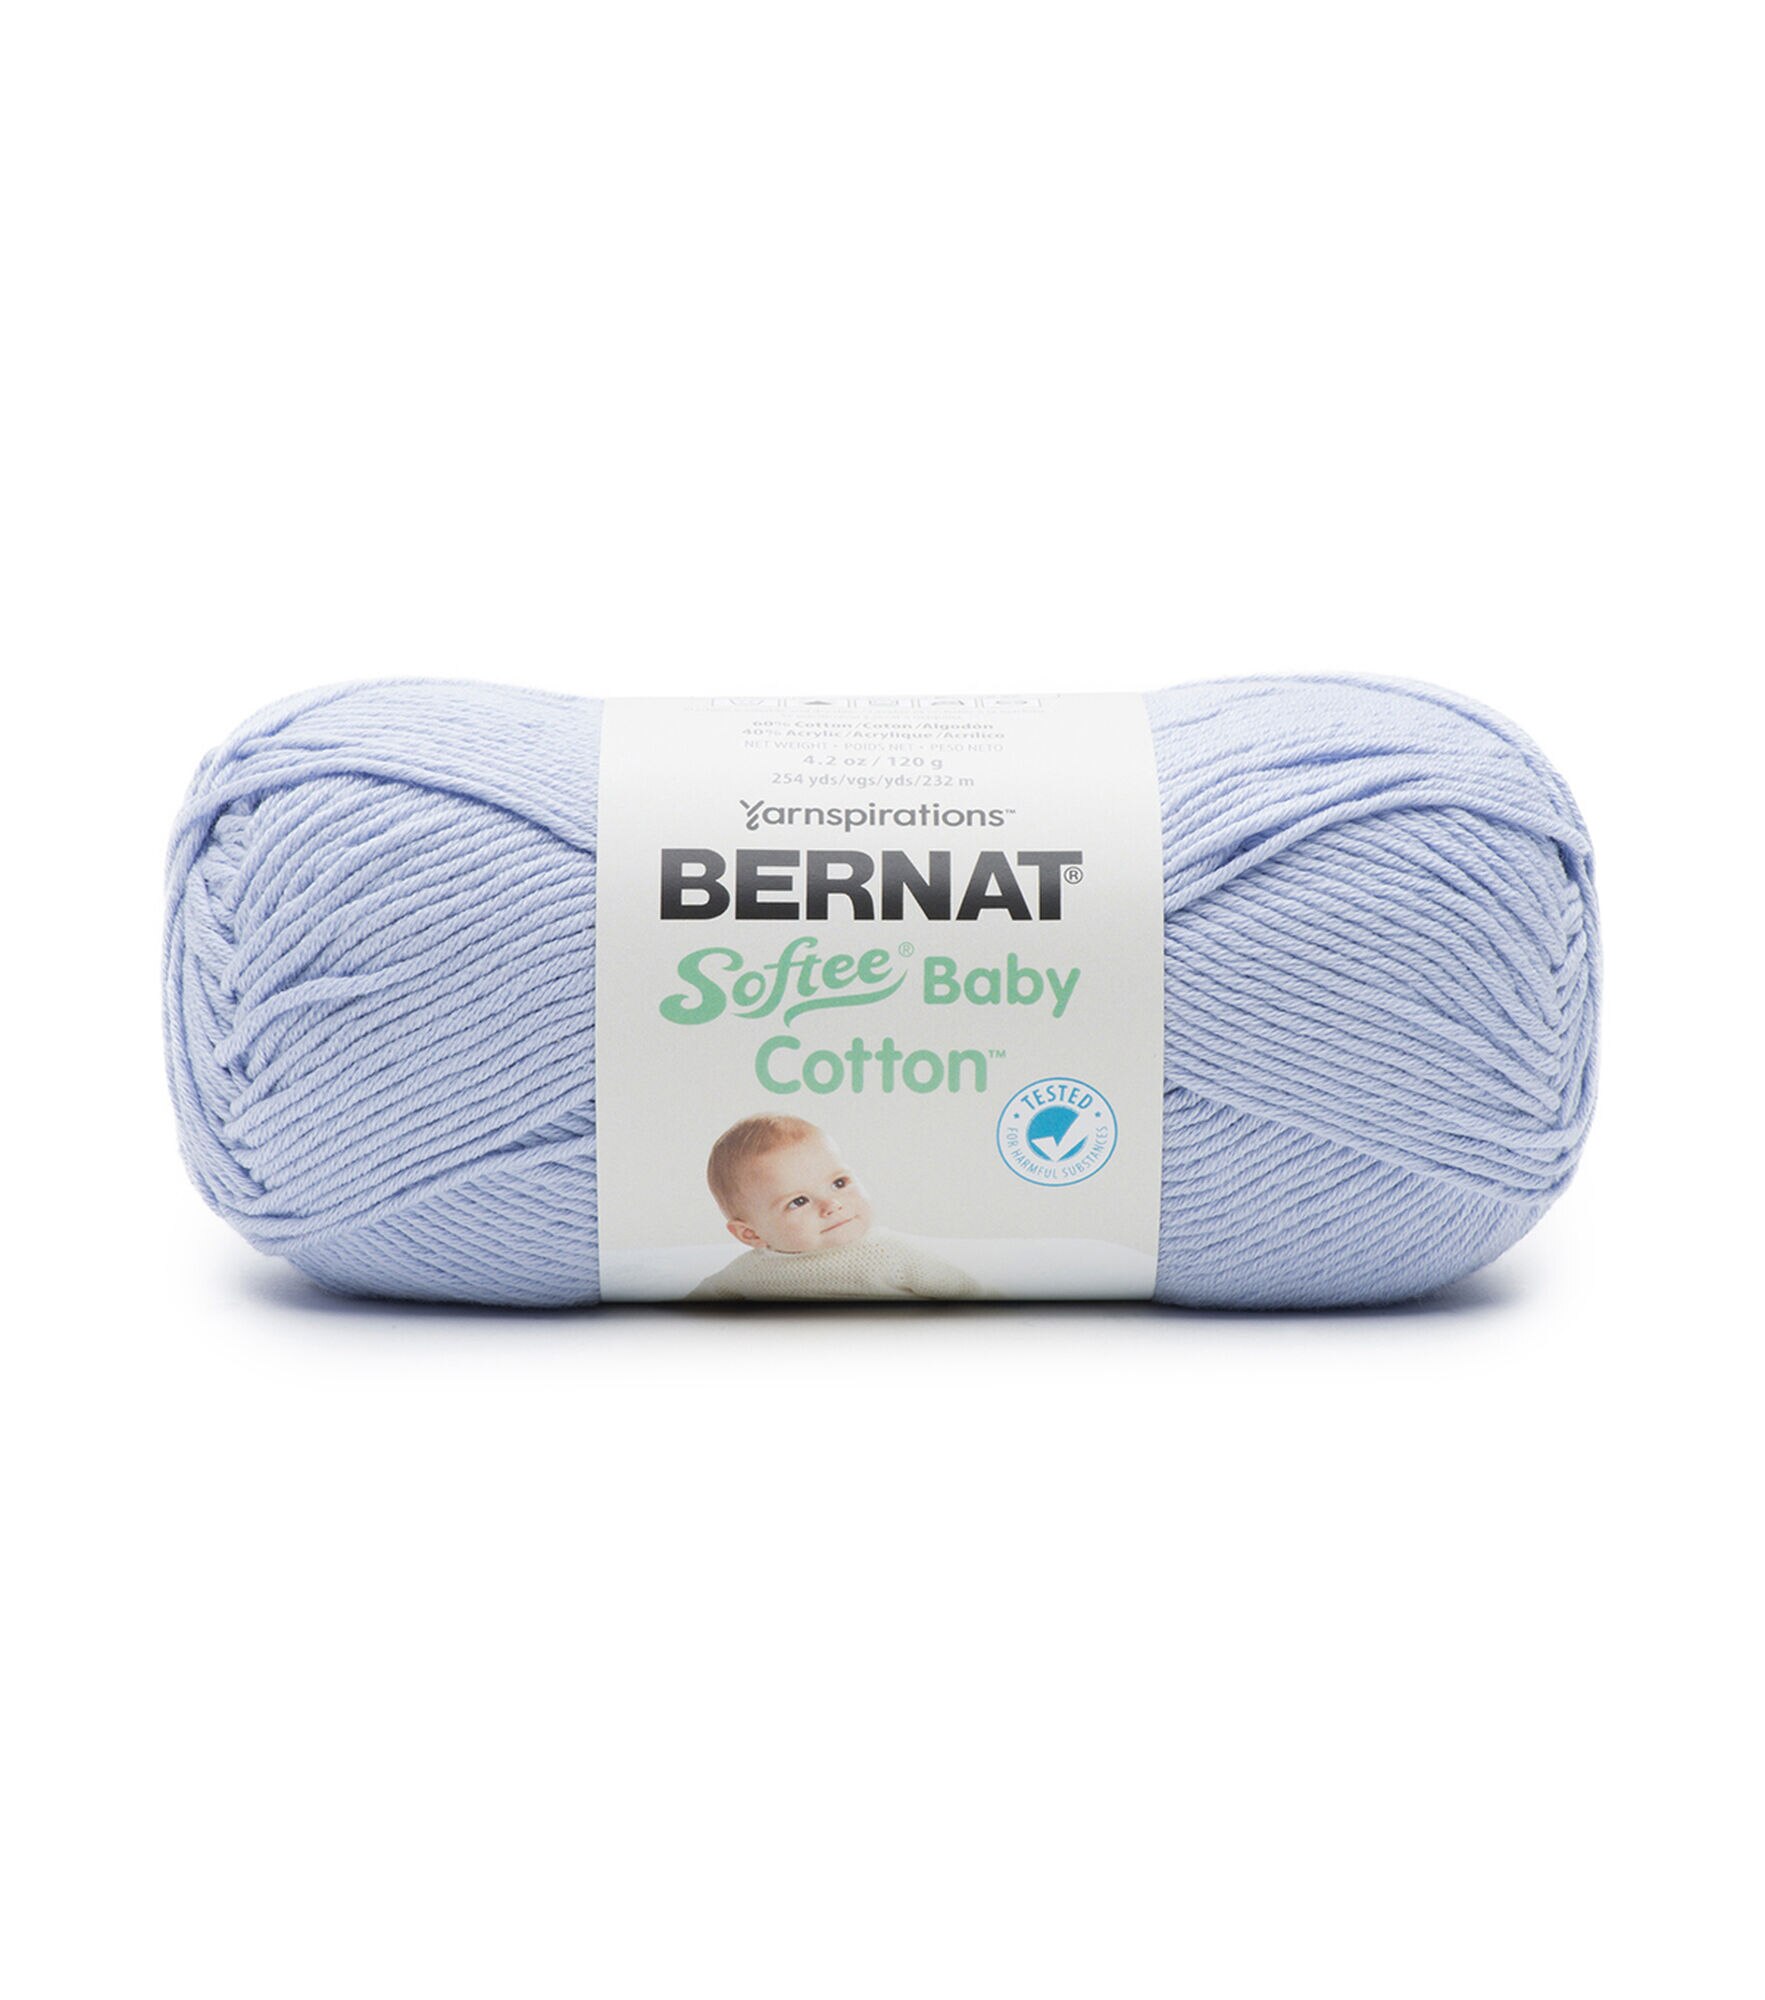 Bernat Softee Baby 254yds Loght Weight Cotton Blend Yarn, Pale Perwinkle, hi-res